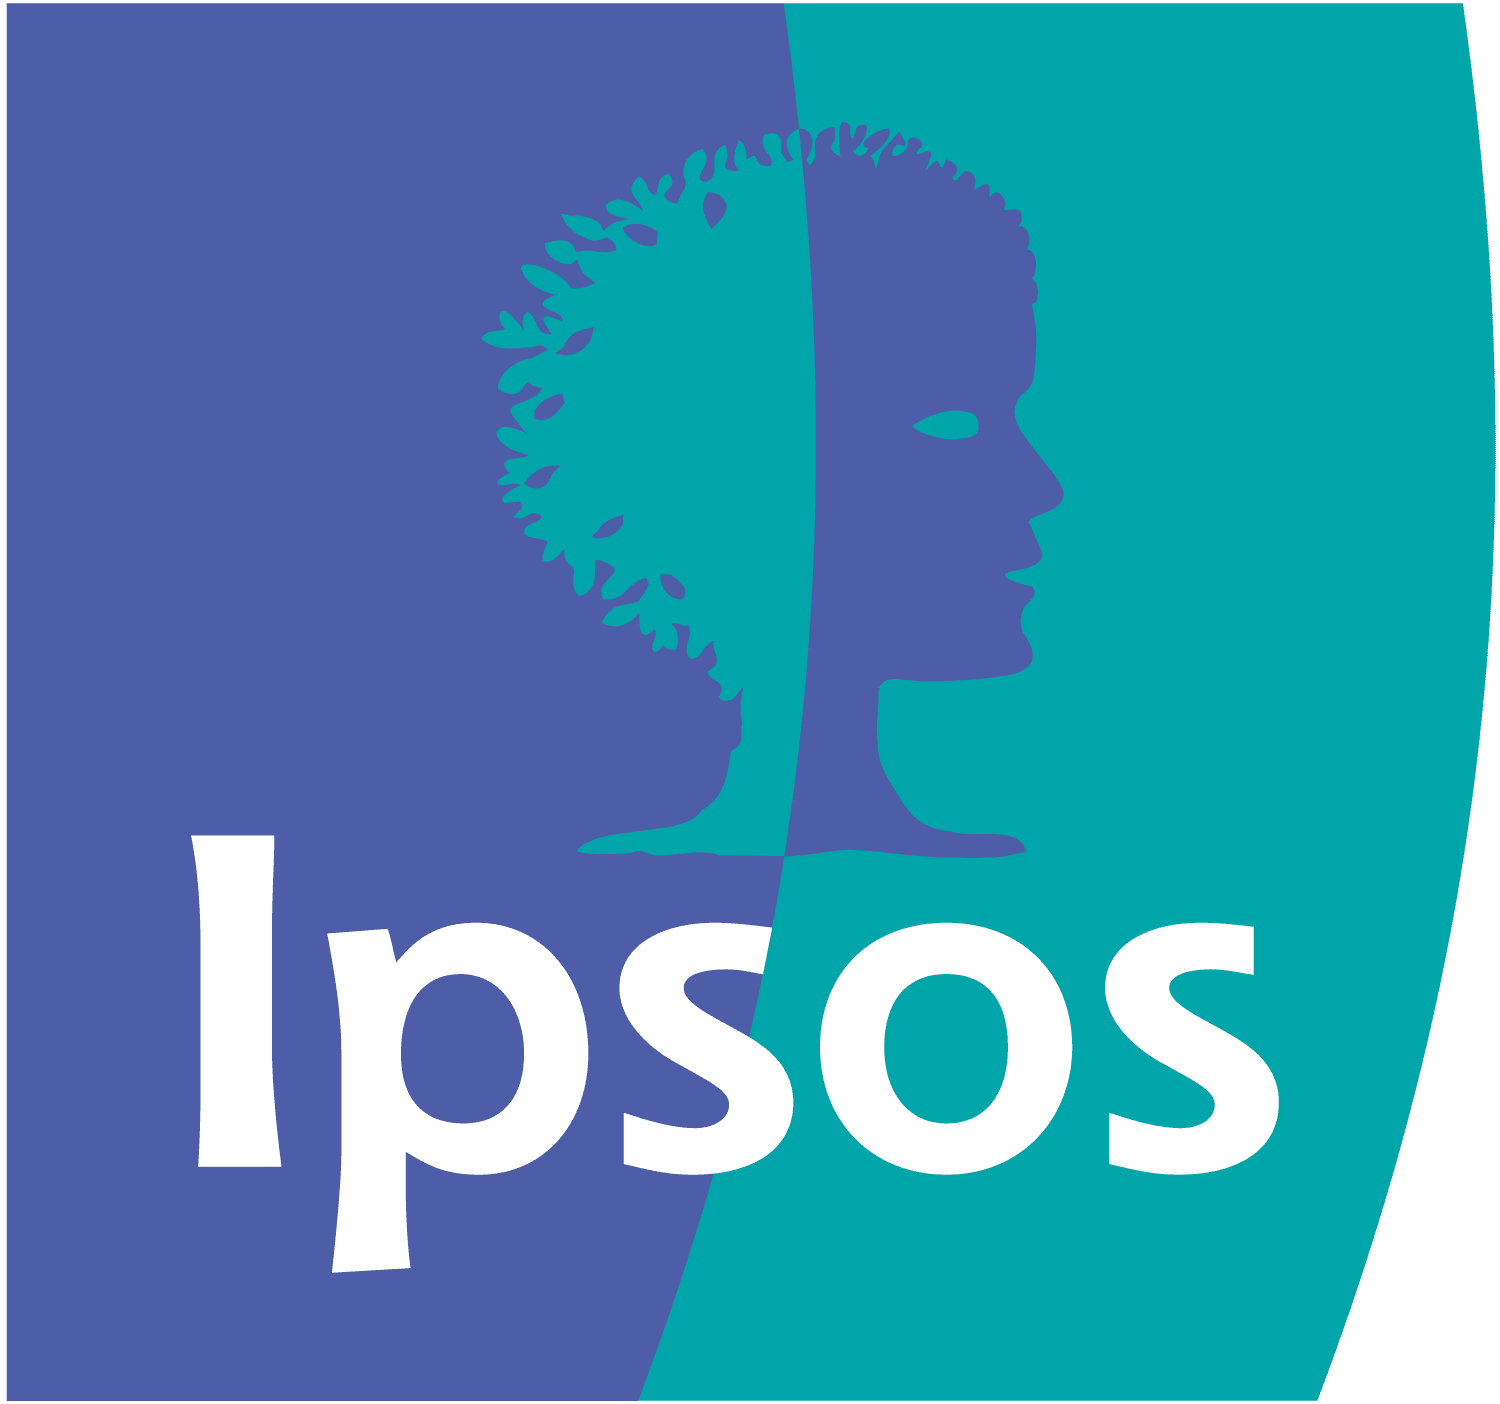 Ipsos logo on blue background with white text 